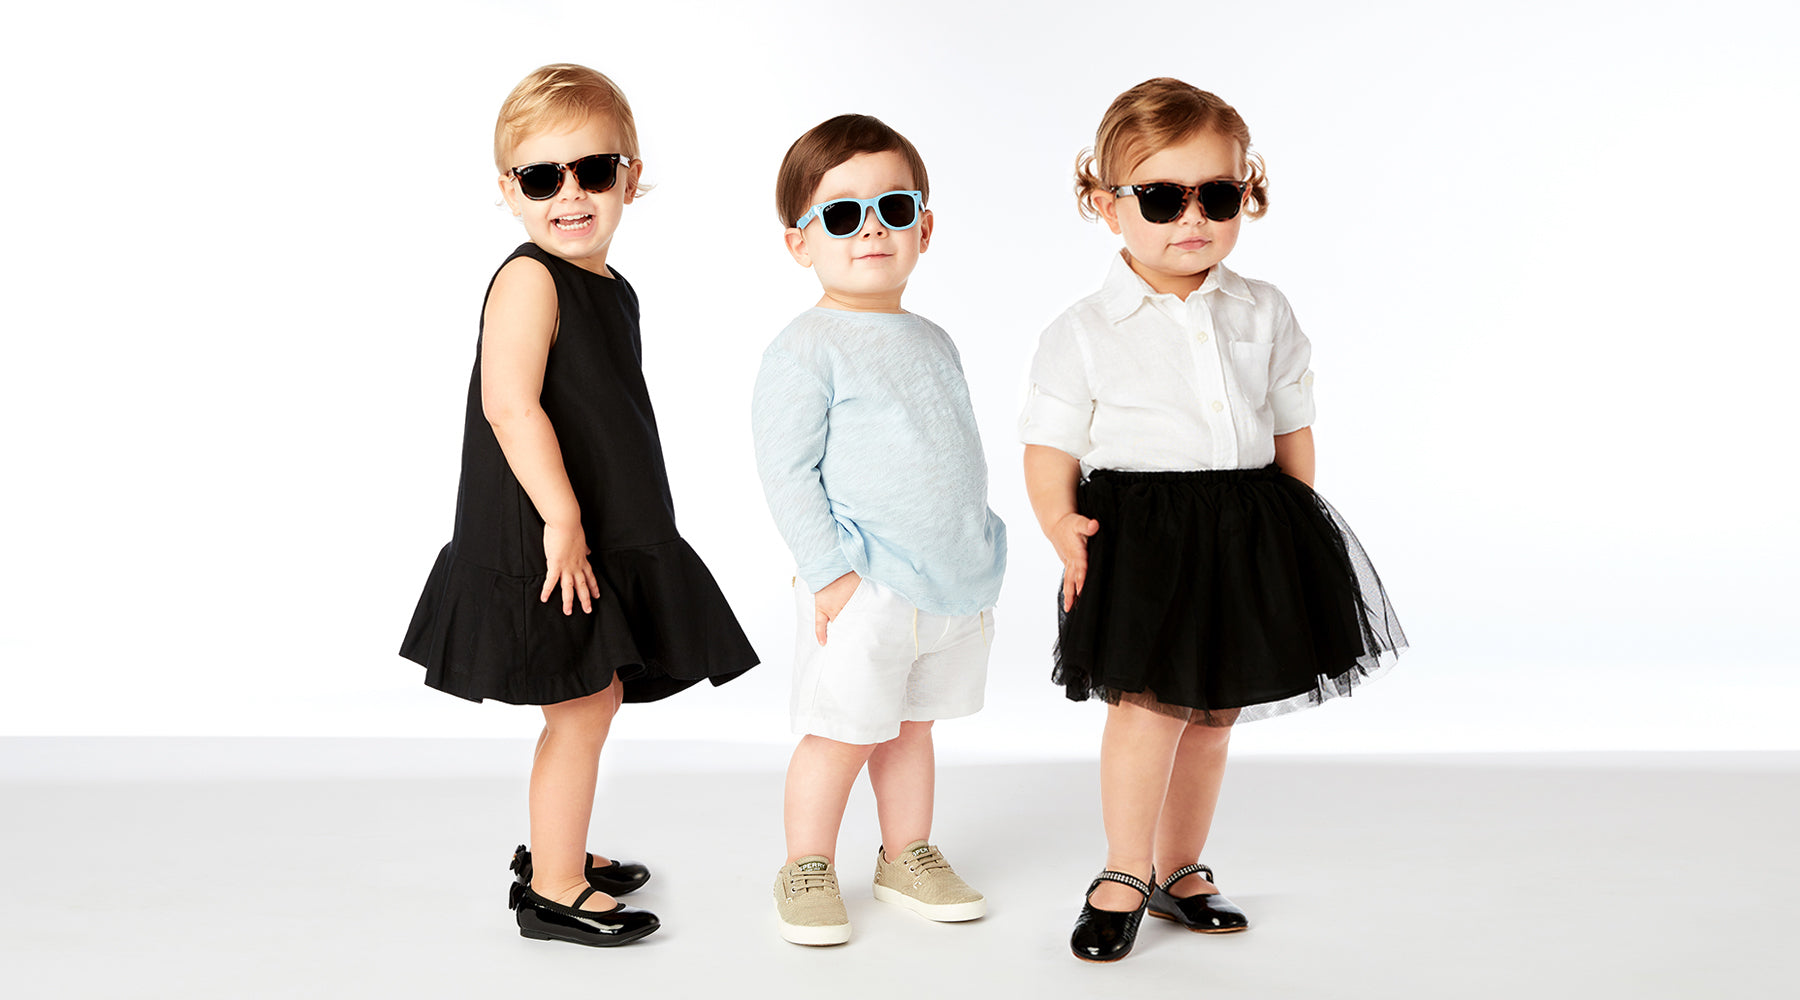 Original WeeFarers® - Kids and Baby Sunglasses!